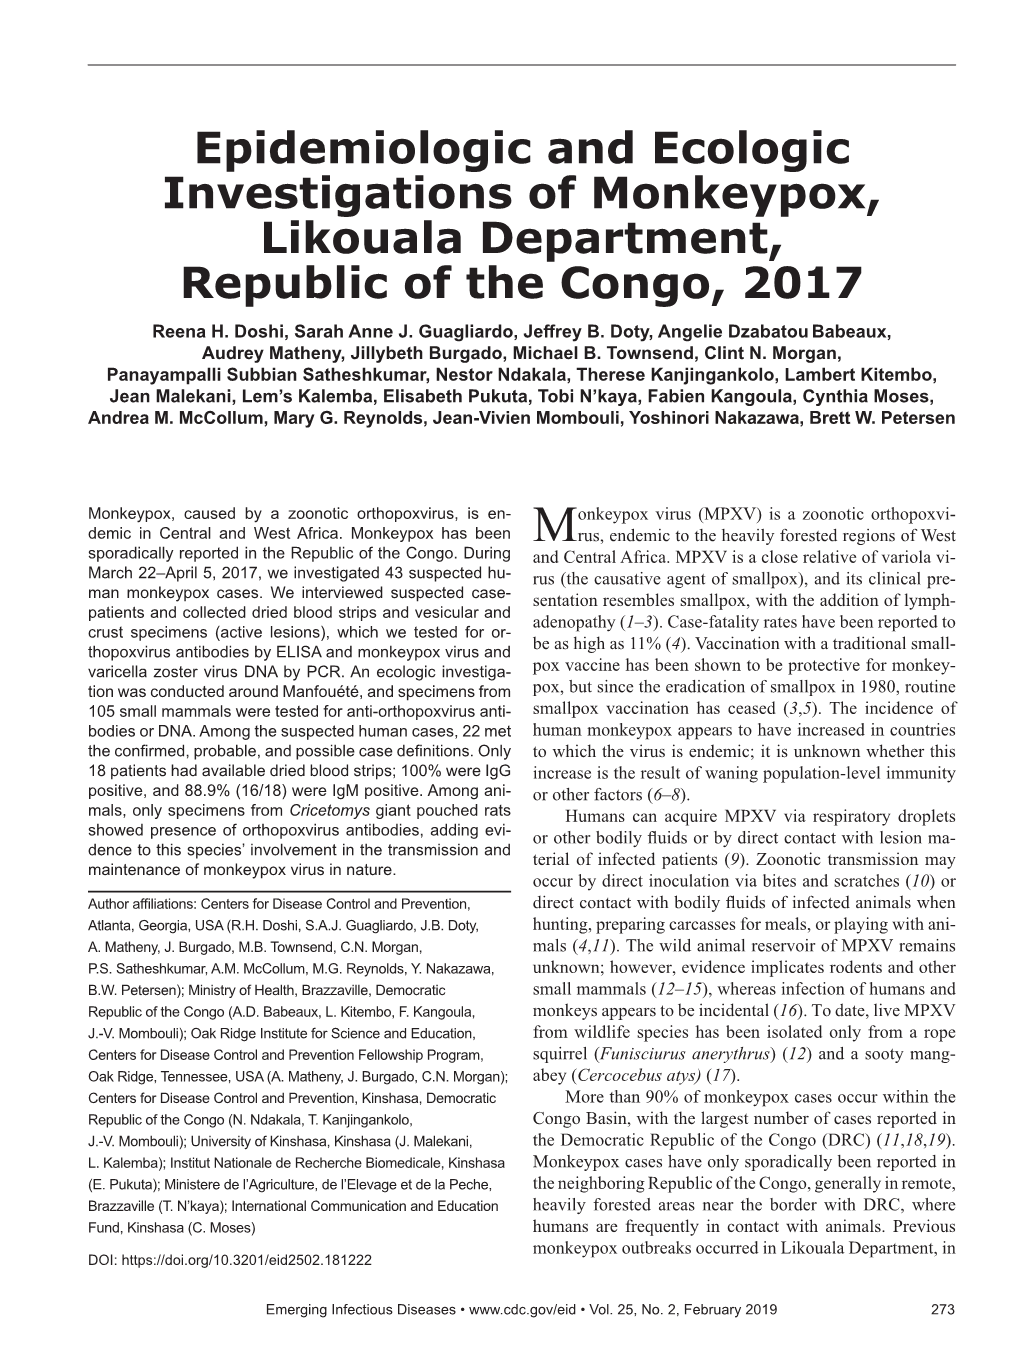 Epidemiologic and Ecologic Investigations of Monkeypox, Likouala Department, Republic of the Congo, 2017 Reena H